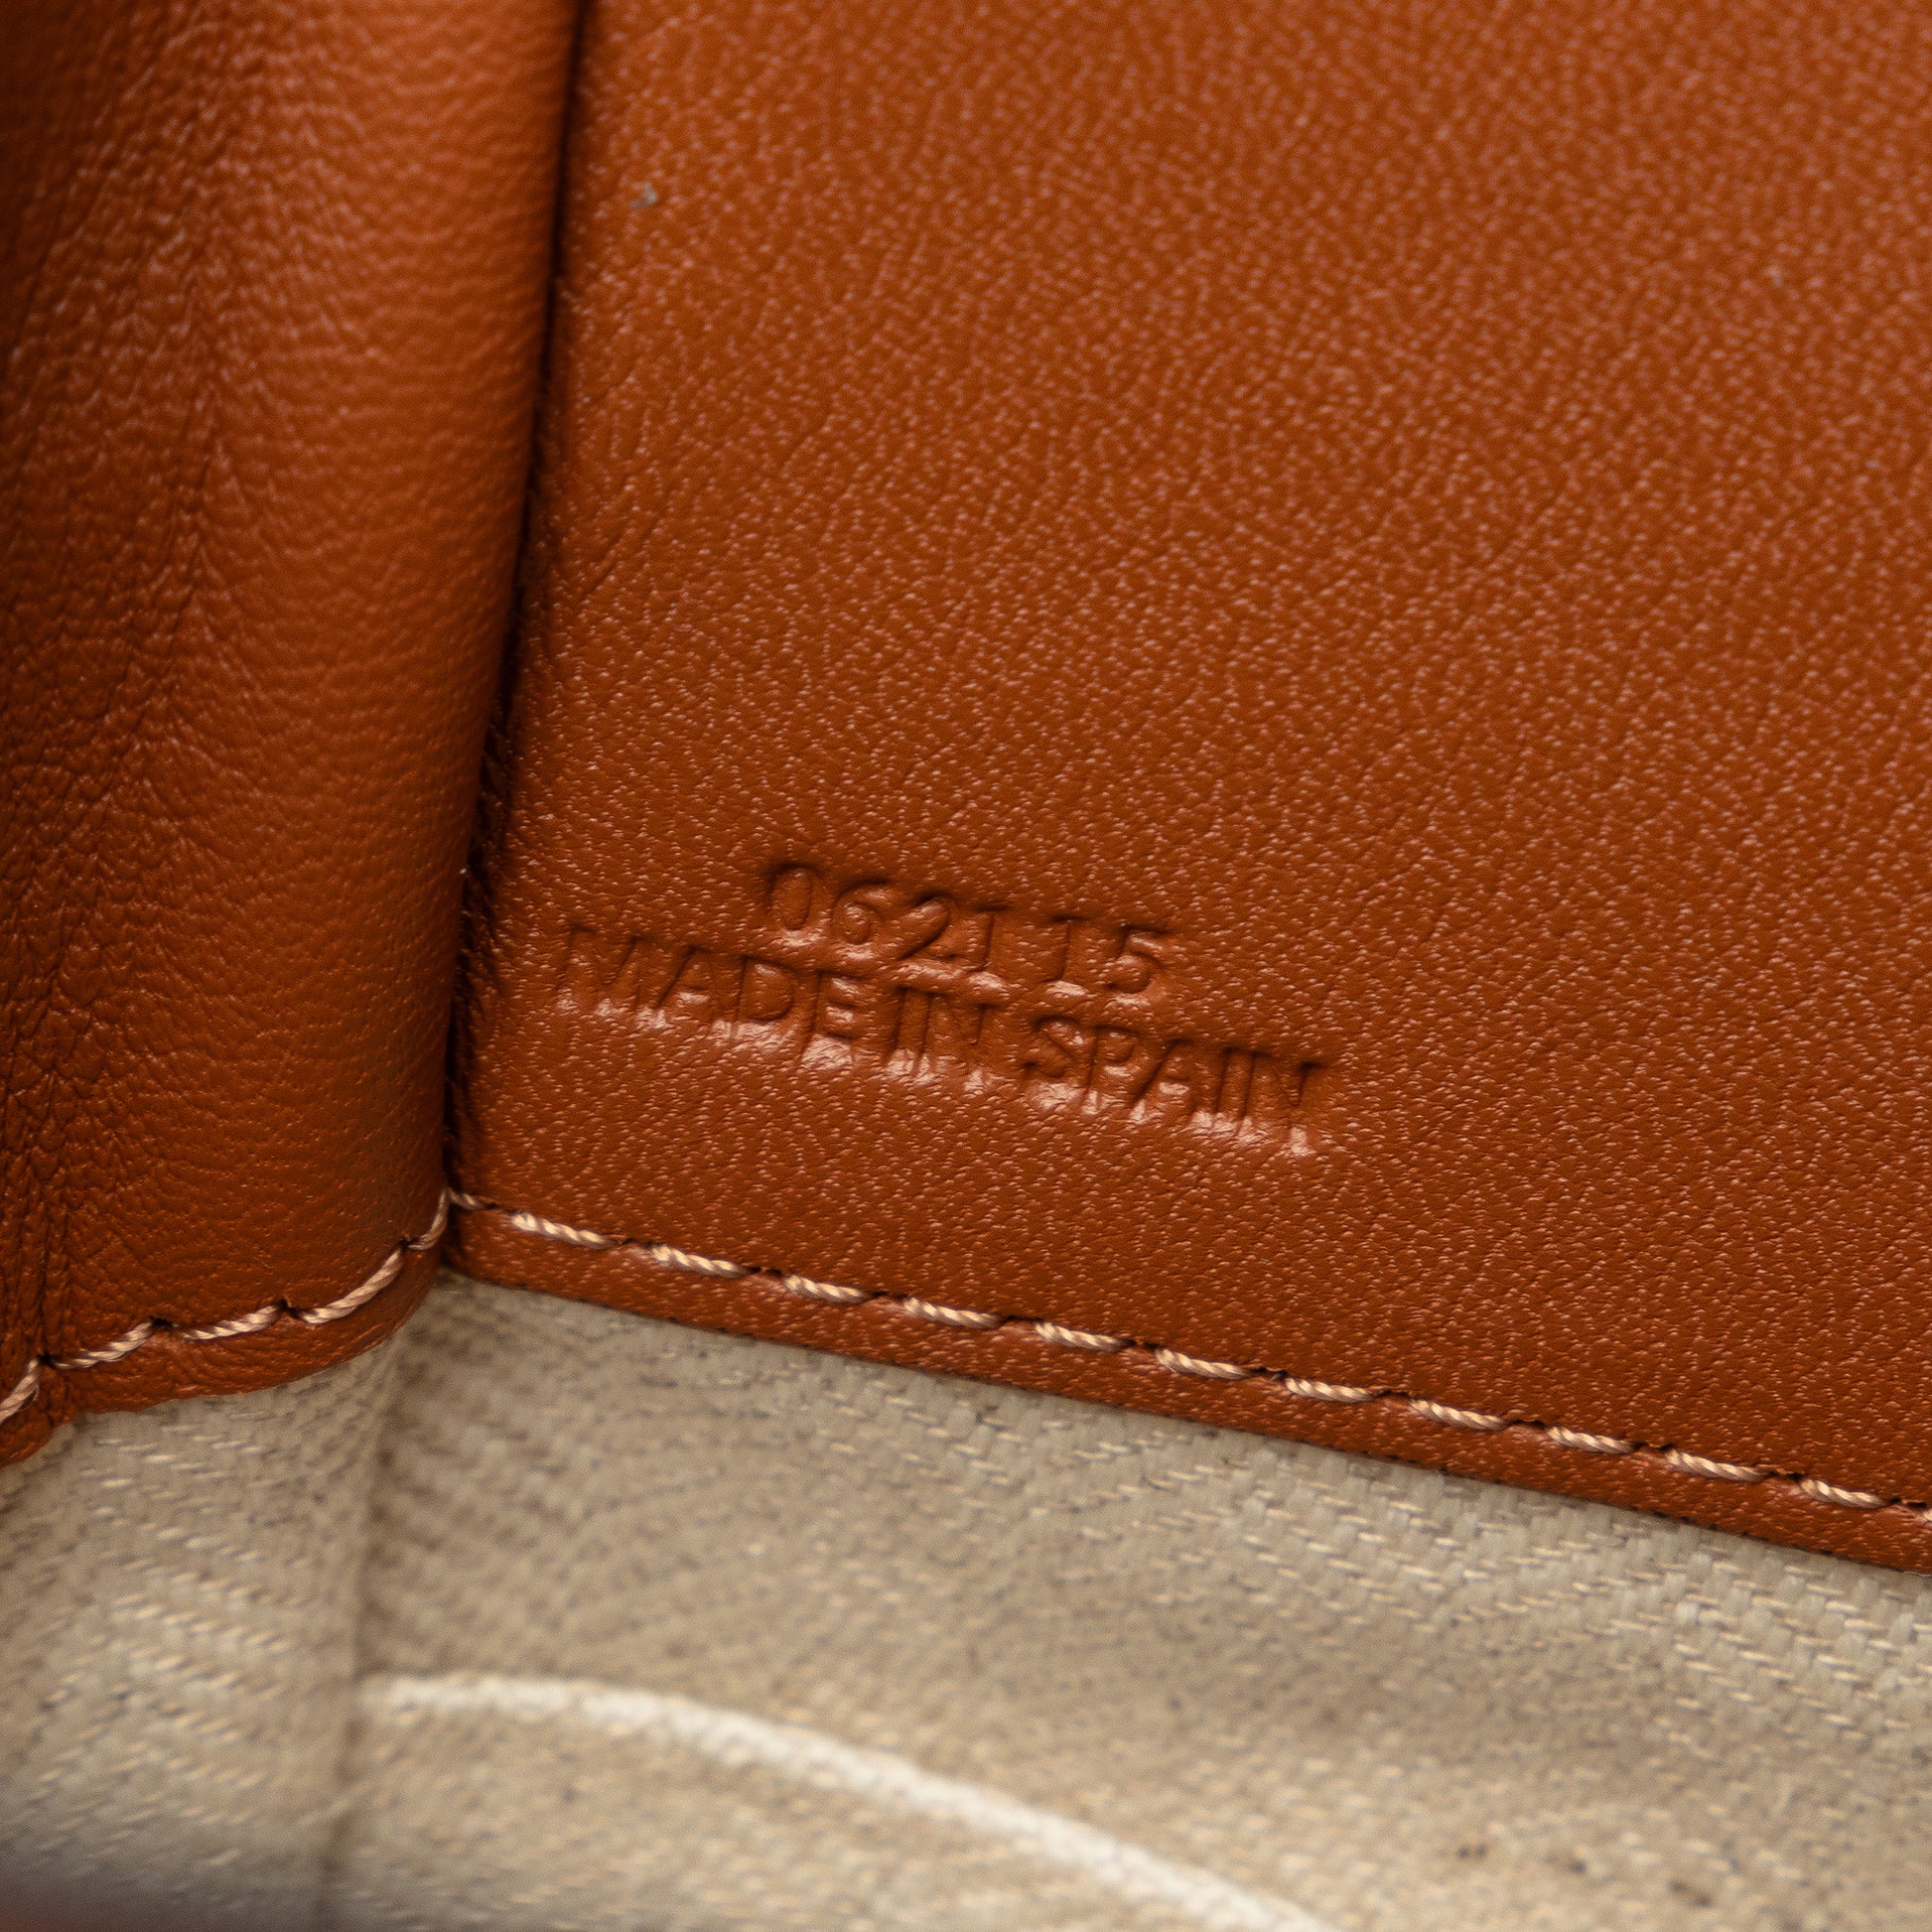 Mini Leather and Canvas Hammock Bag Brown - Gaby Paris